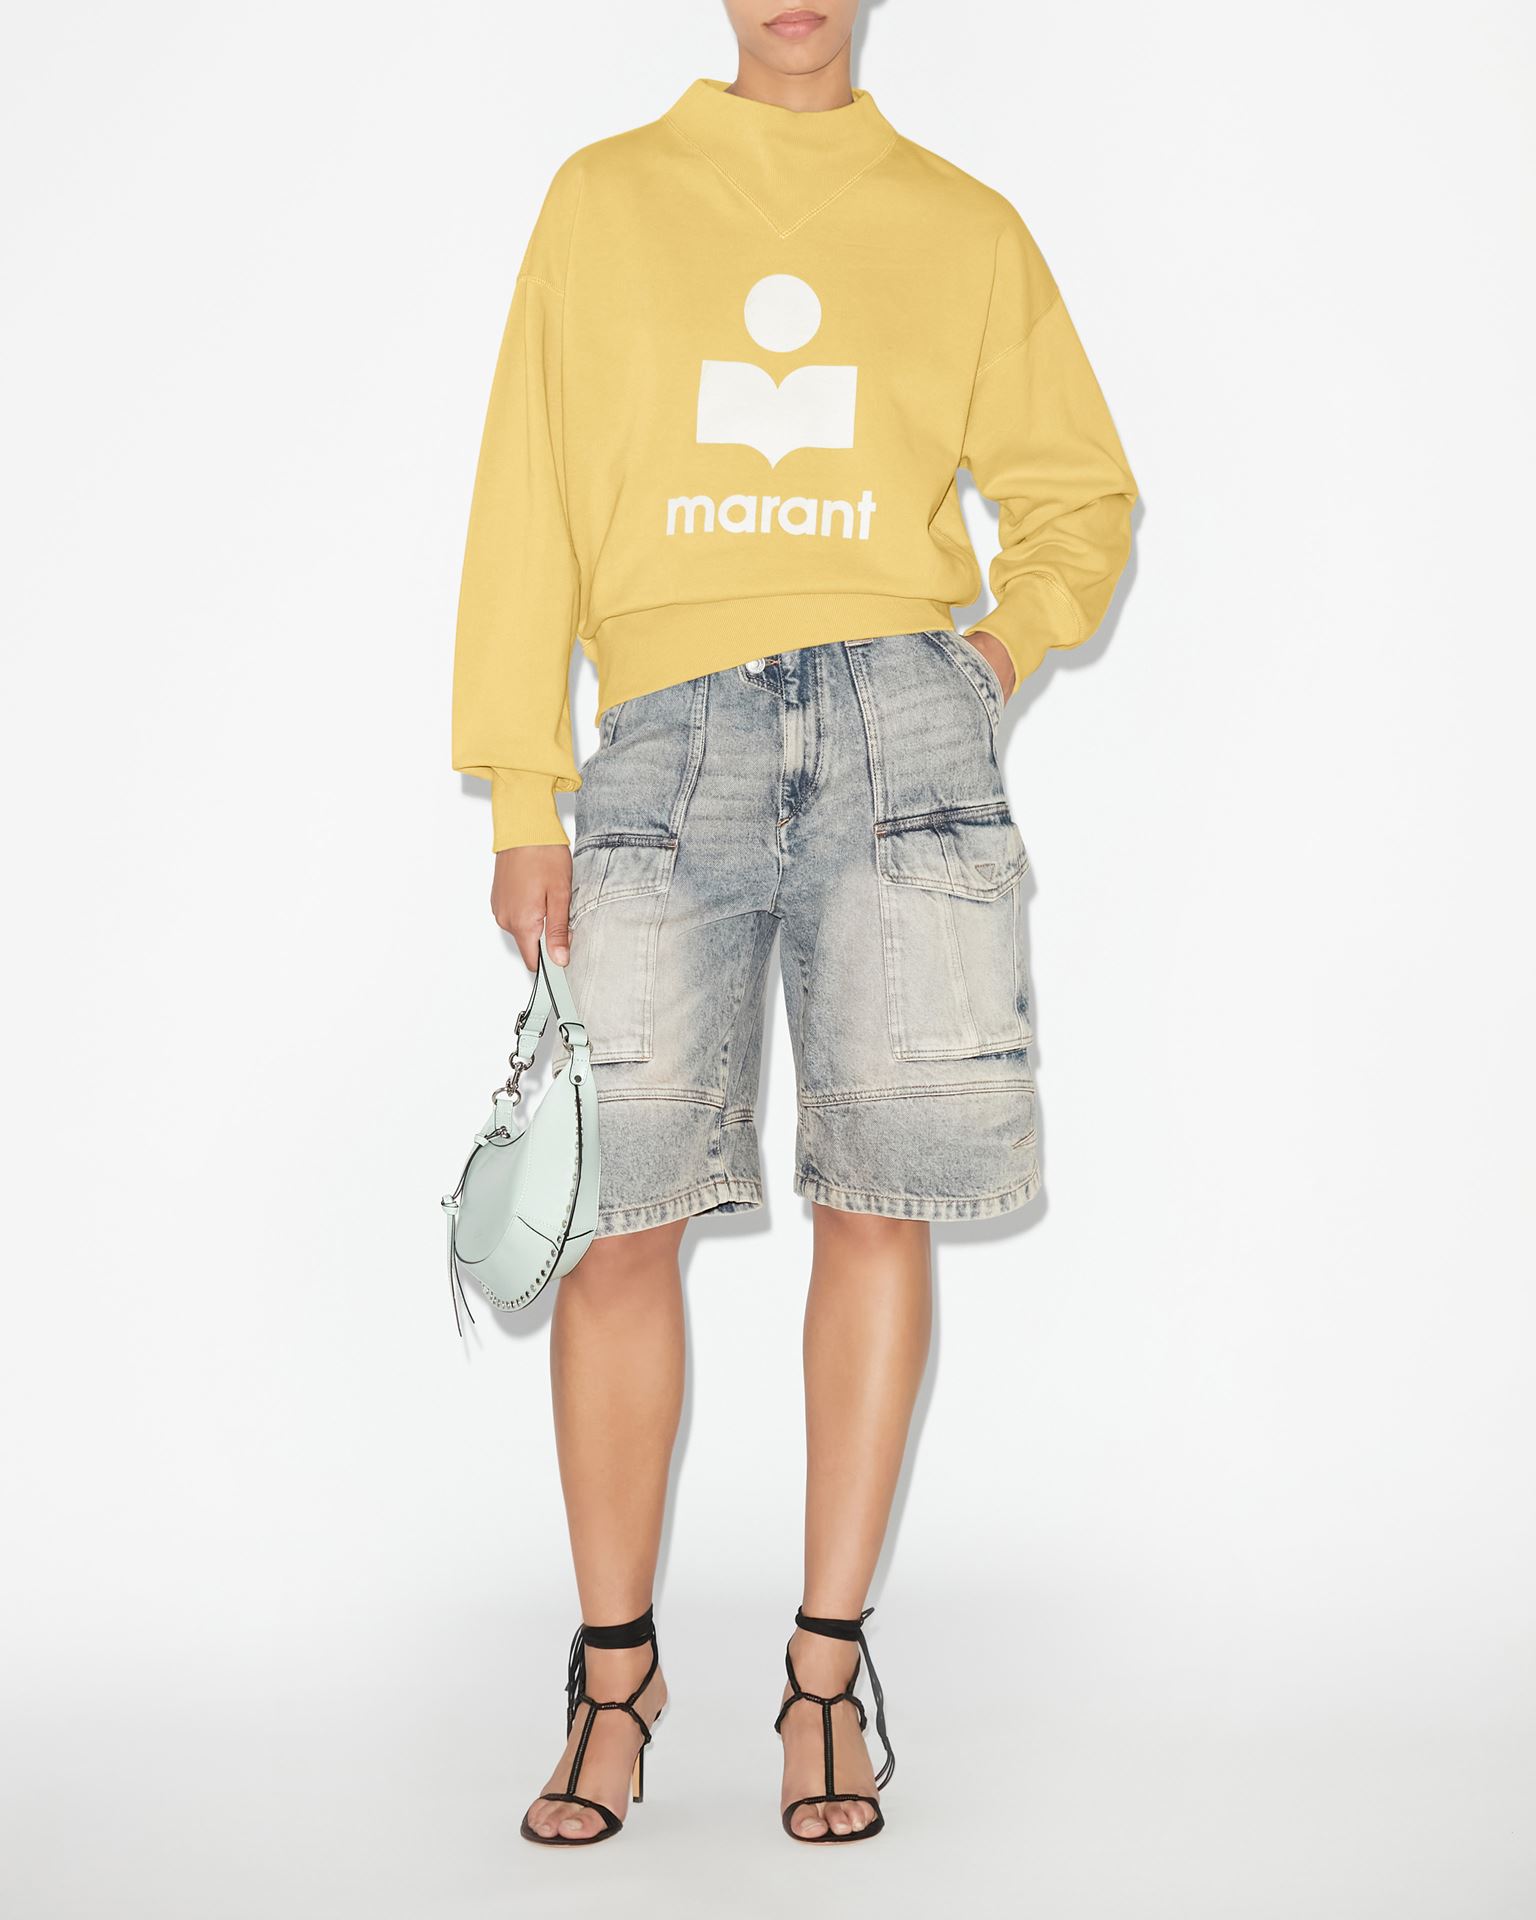 Isabel Marant Marant Étoile, Sweatshirt A' Logo Moby - Femme - Jaune